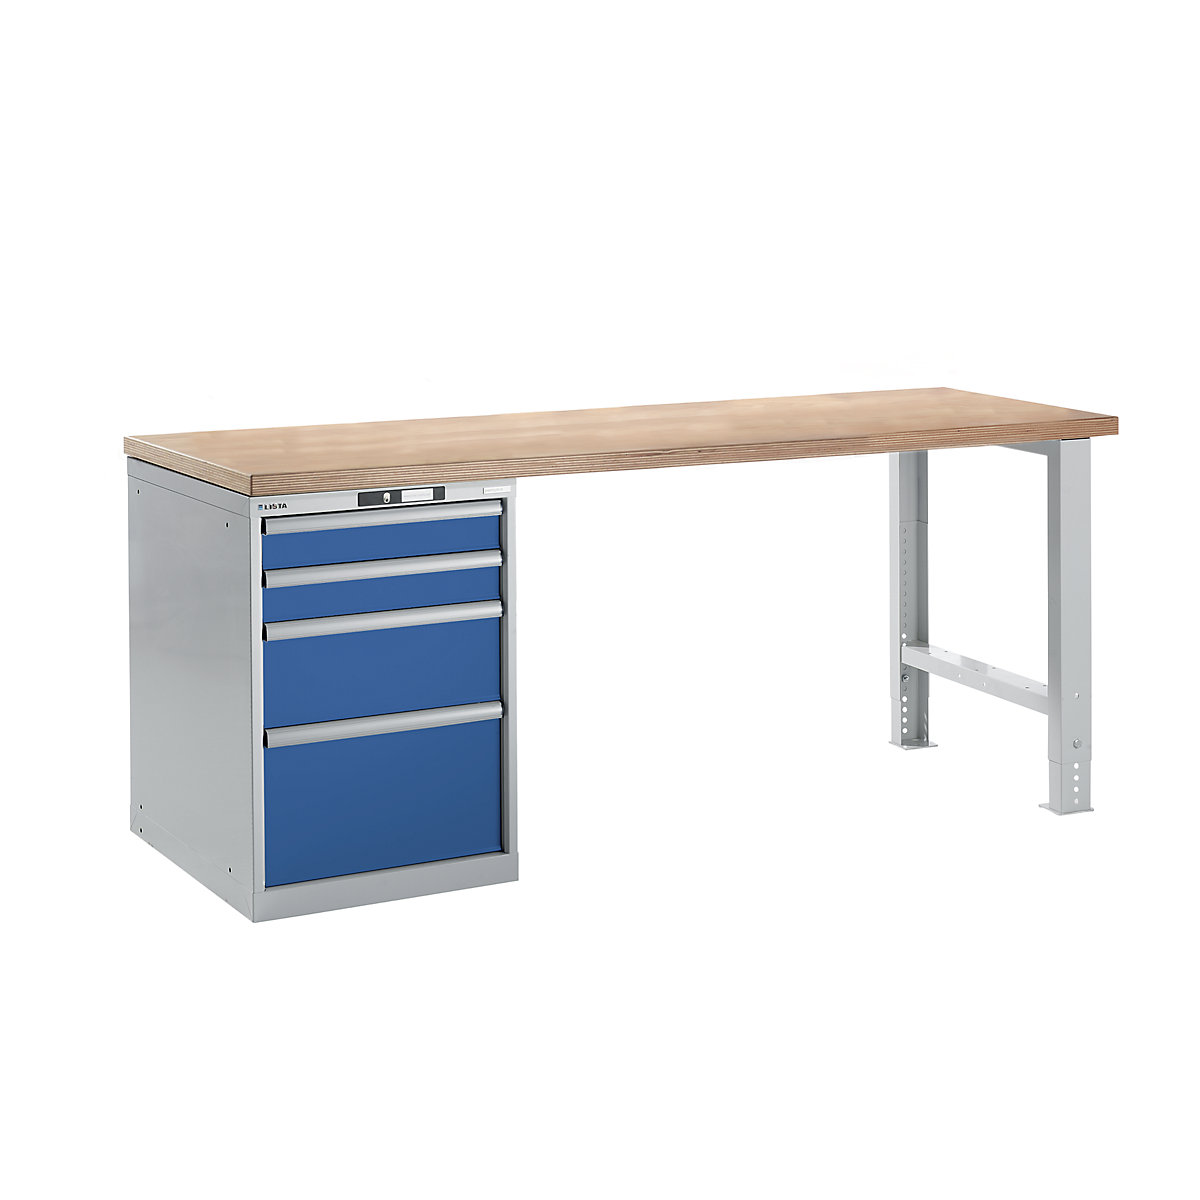 Modular workbench – LISTA, height 840 mm, pedestal drawer unit, 4 drawers, gentian blue, table width 2000 mm-14